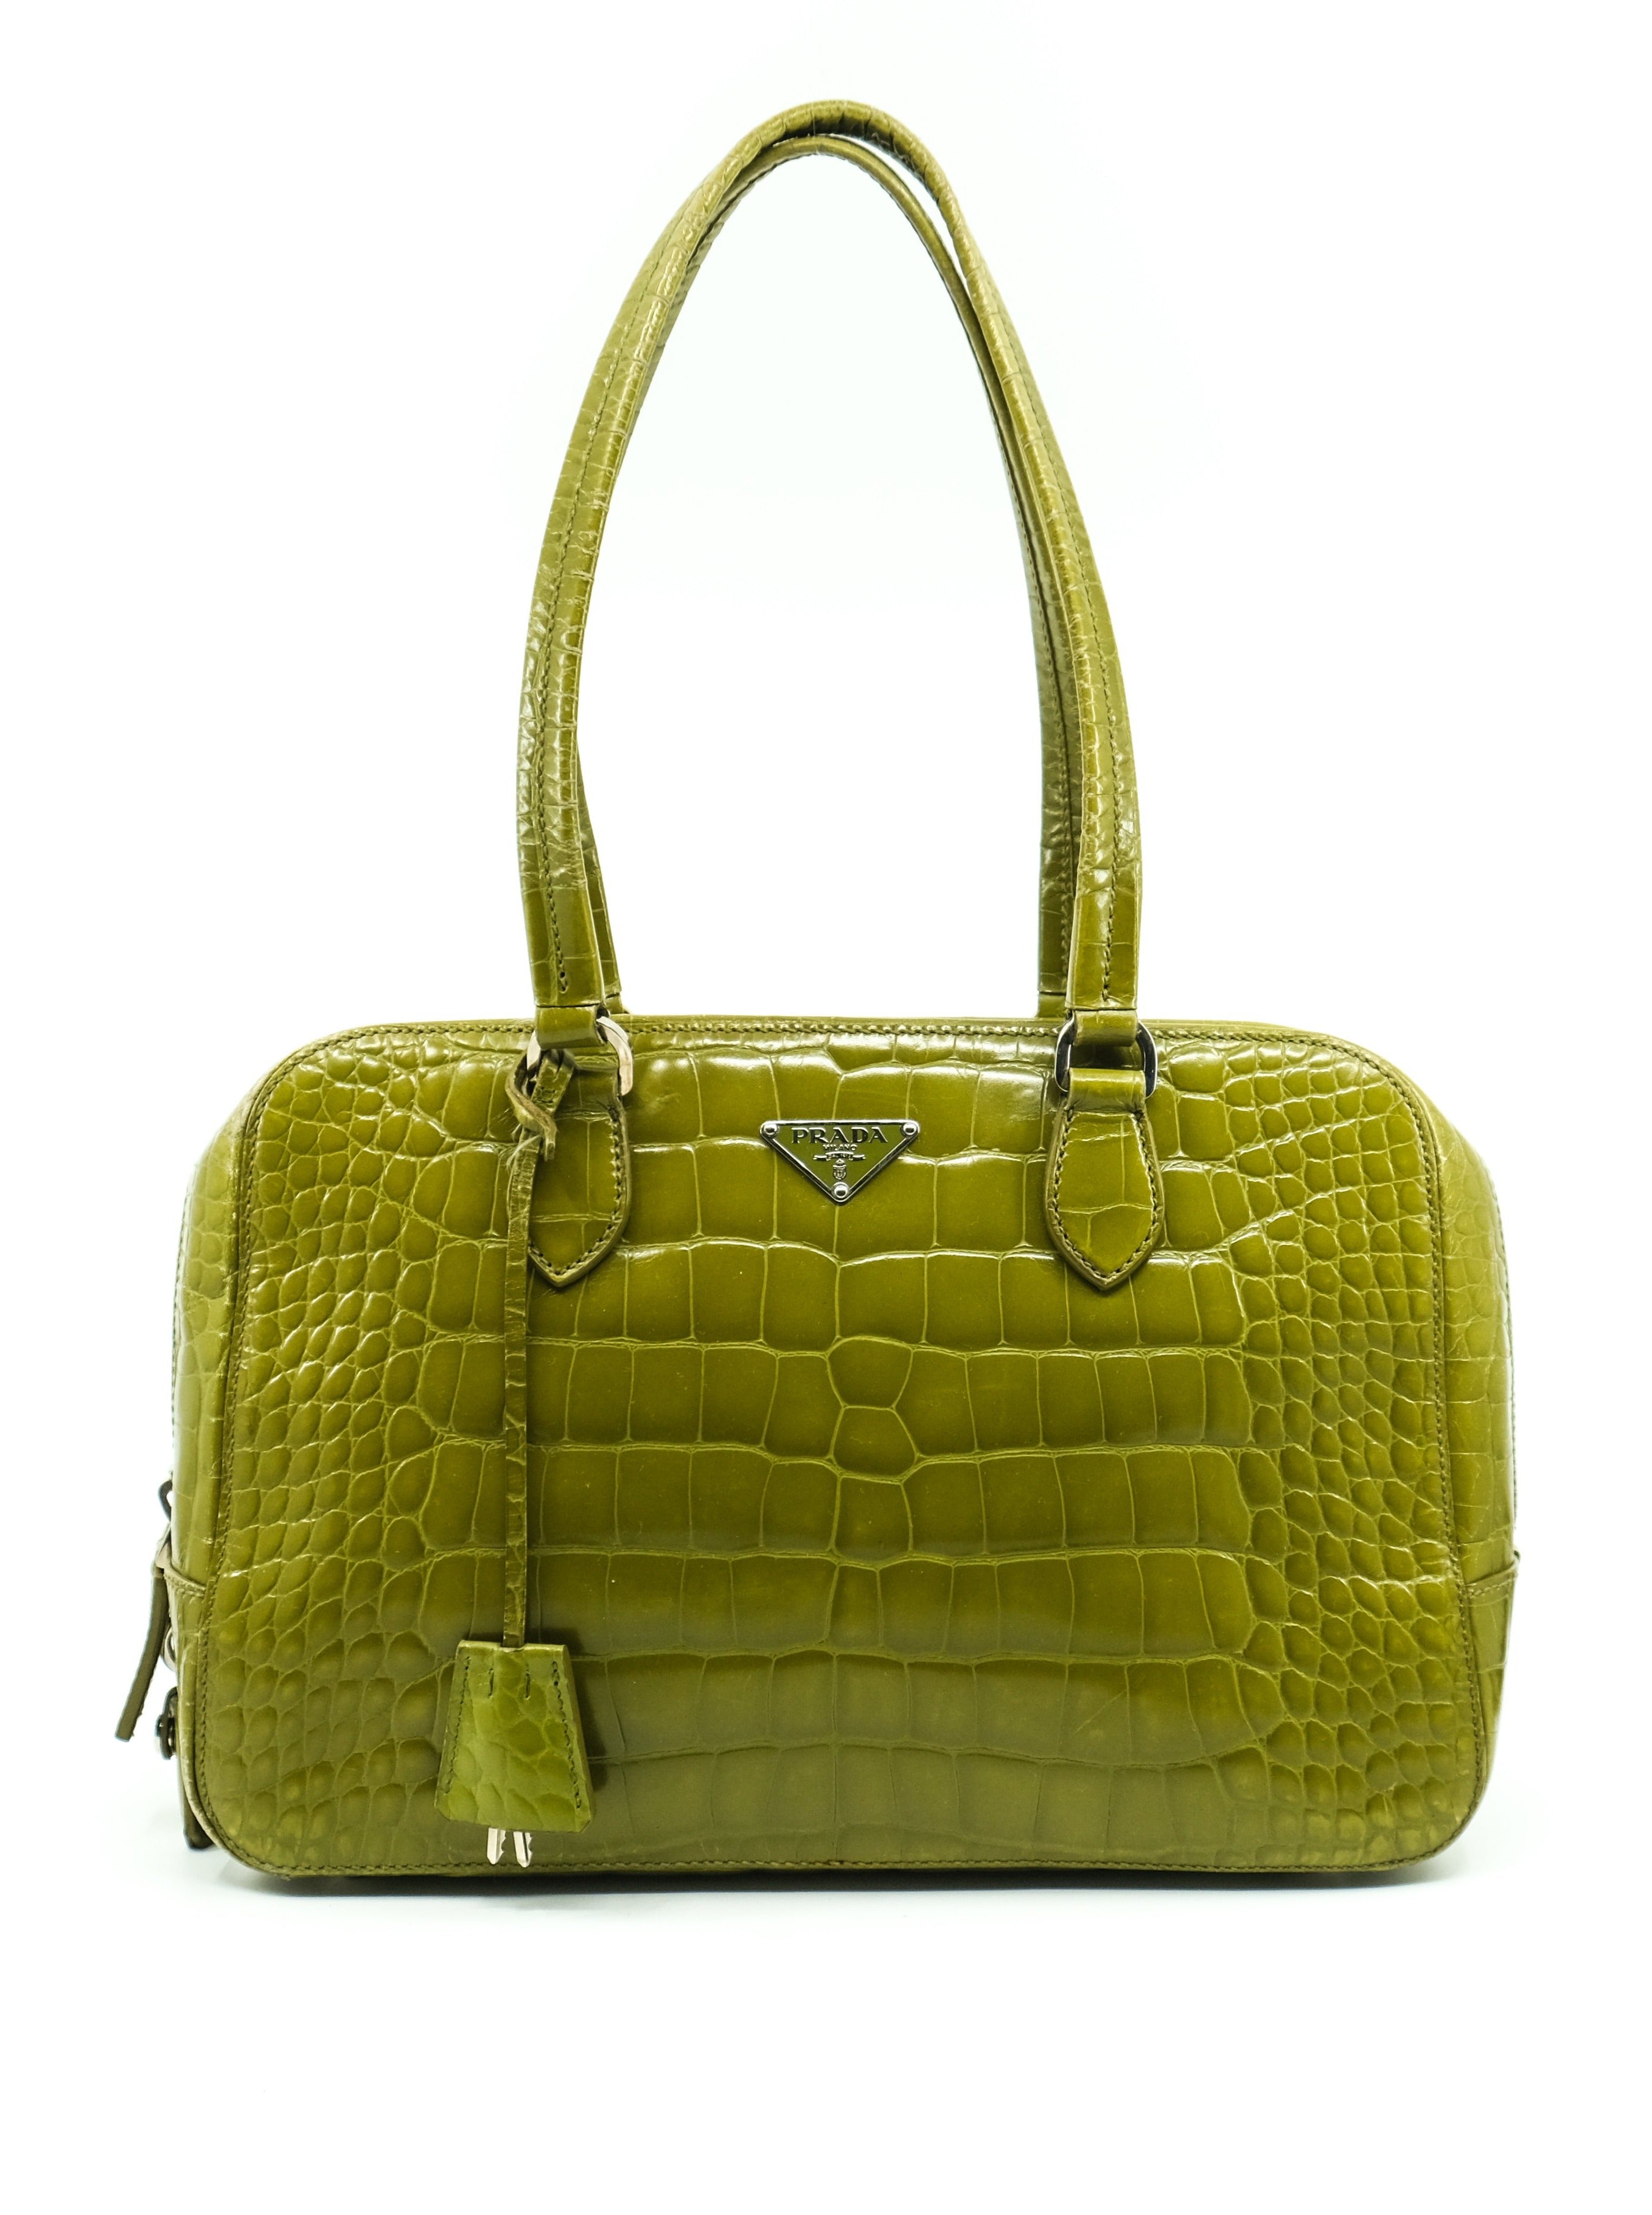 Genuine Prada Bauletto Shoulder Bag / Tote Handbag Green & Black Banana  Motif 